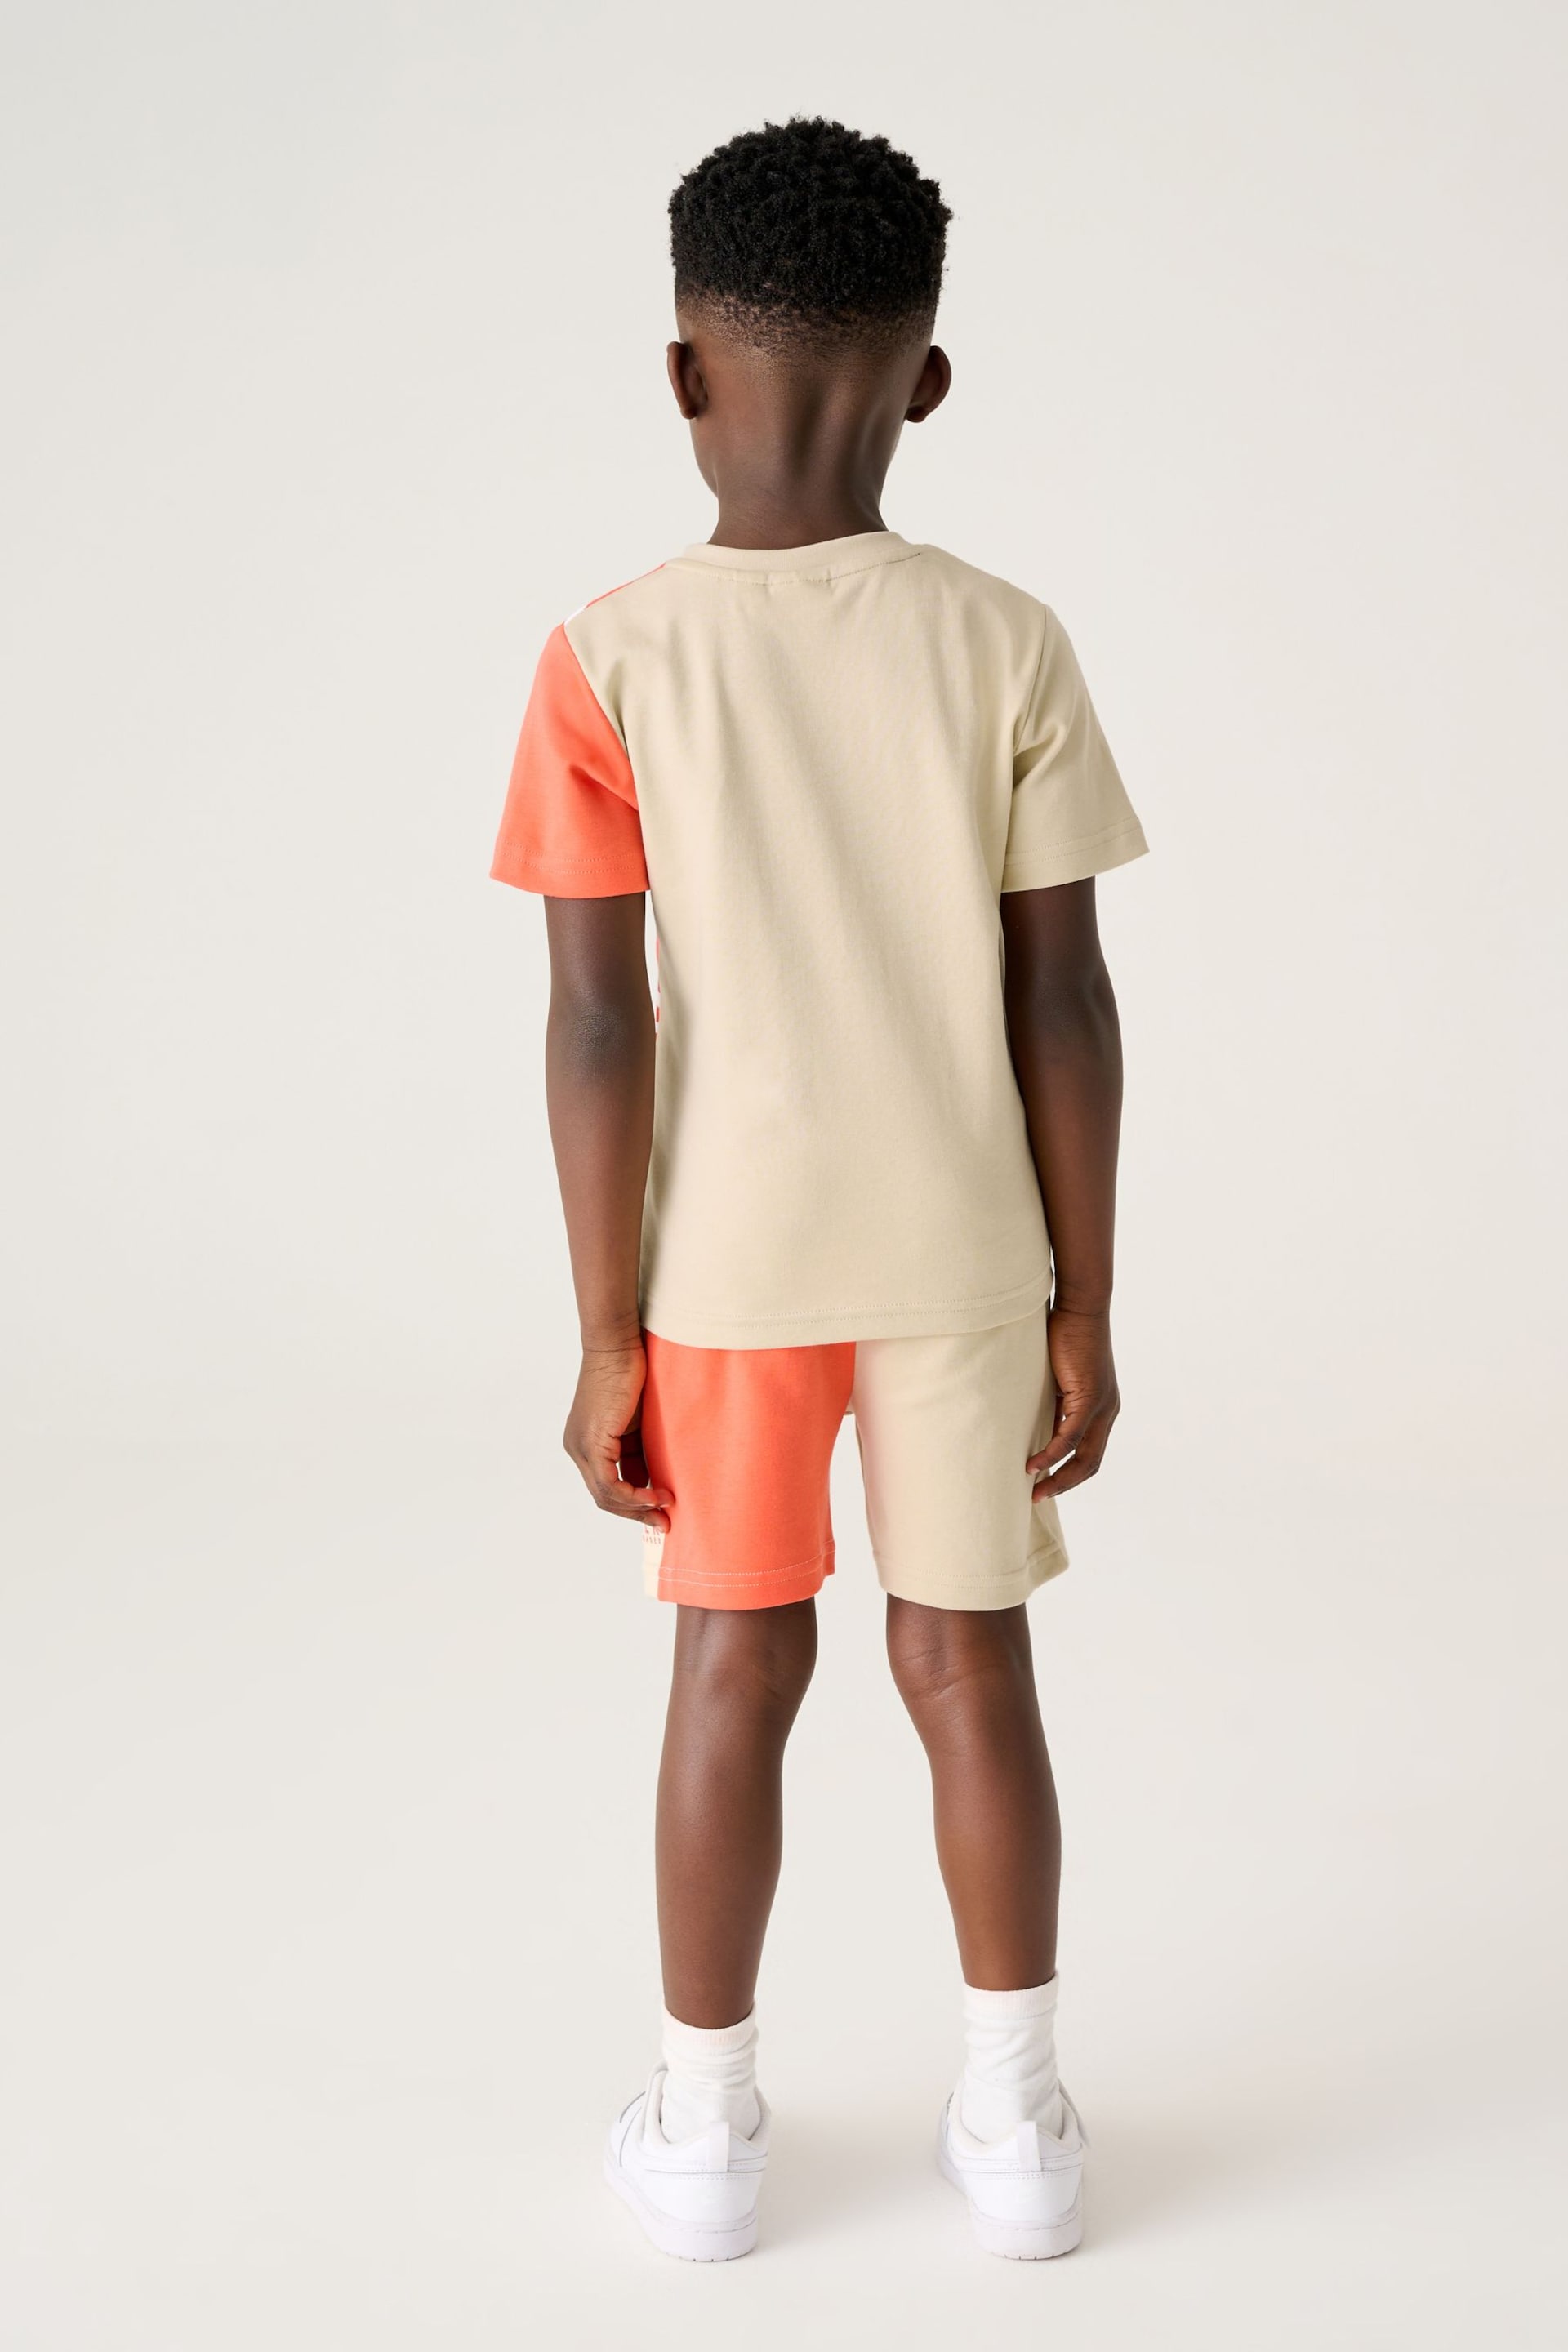 Baker by Ted Baker Orange Colourblock T-Shirt And Shorts Set - Image 2 of 8